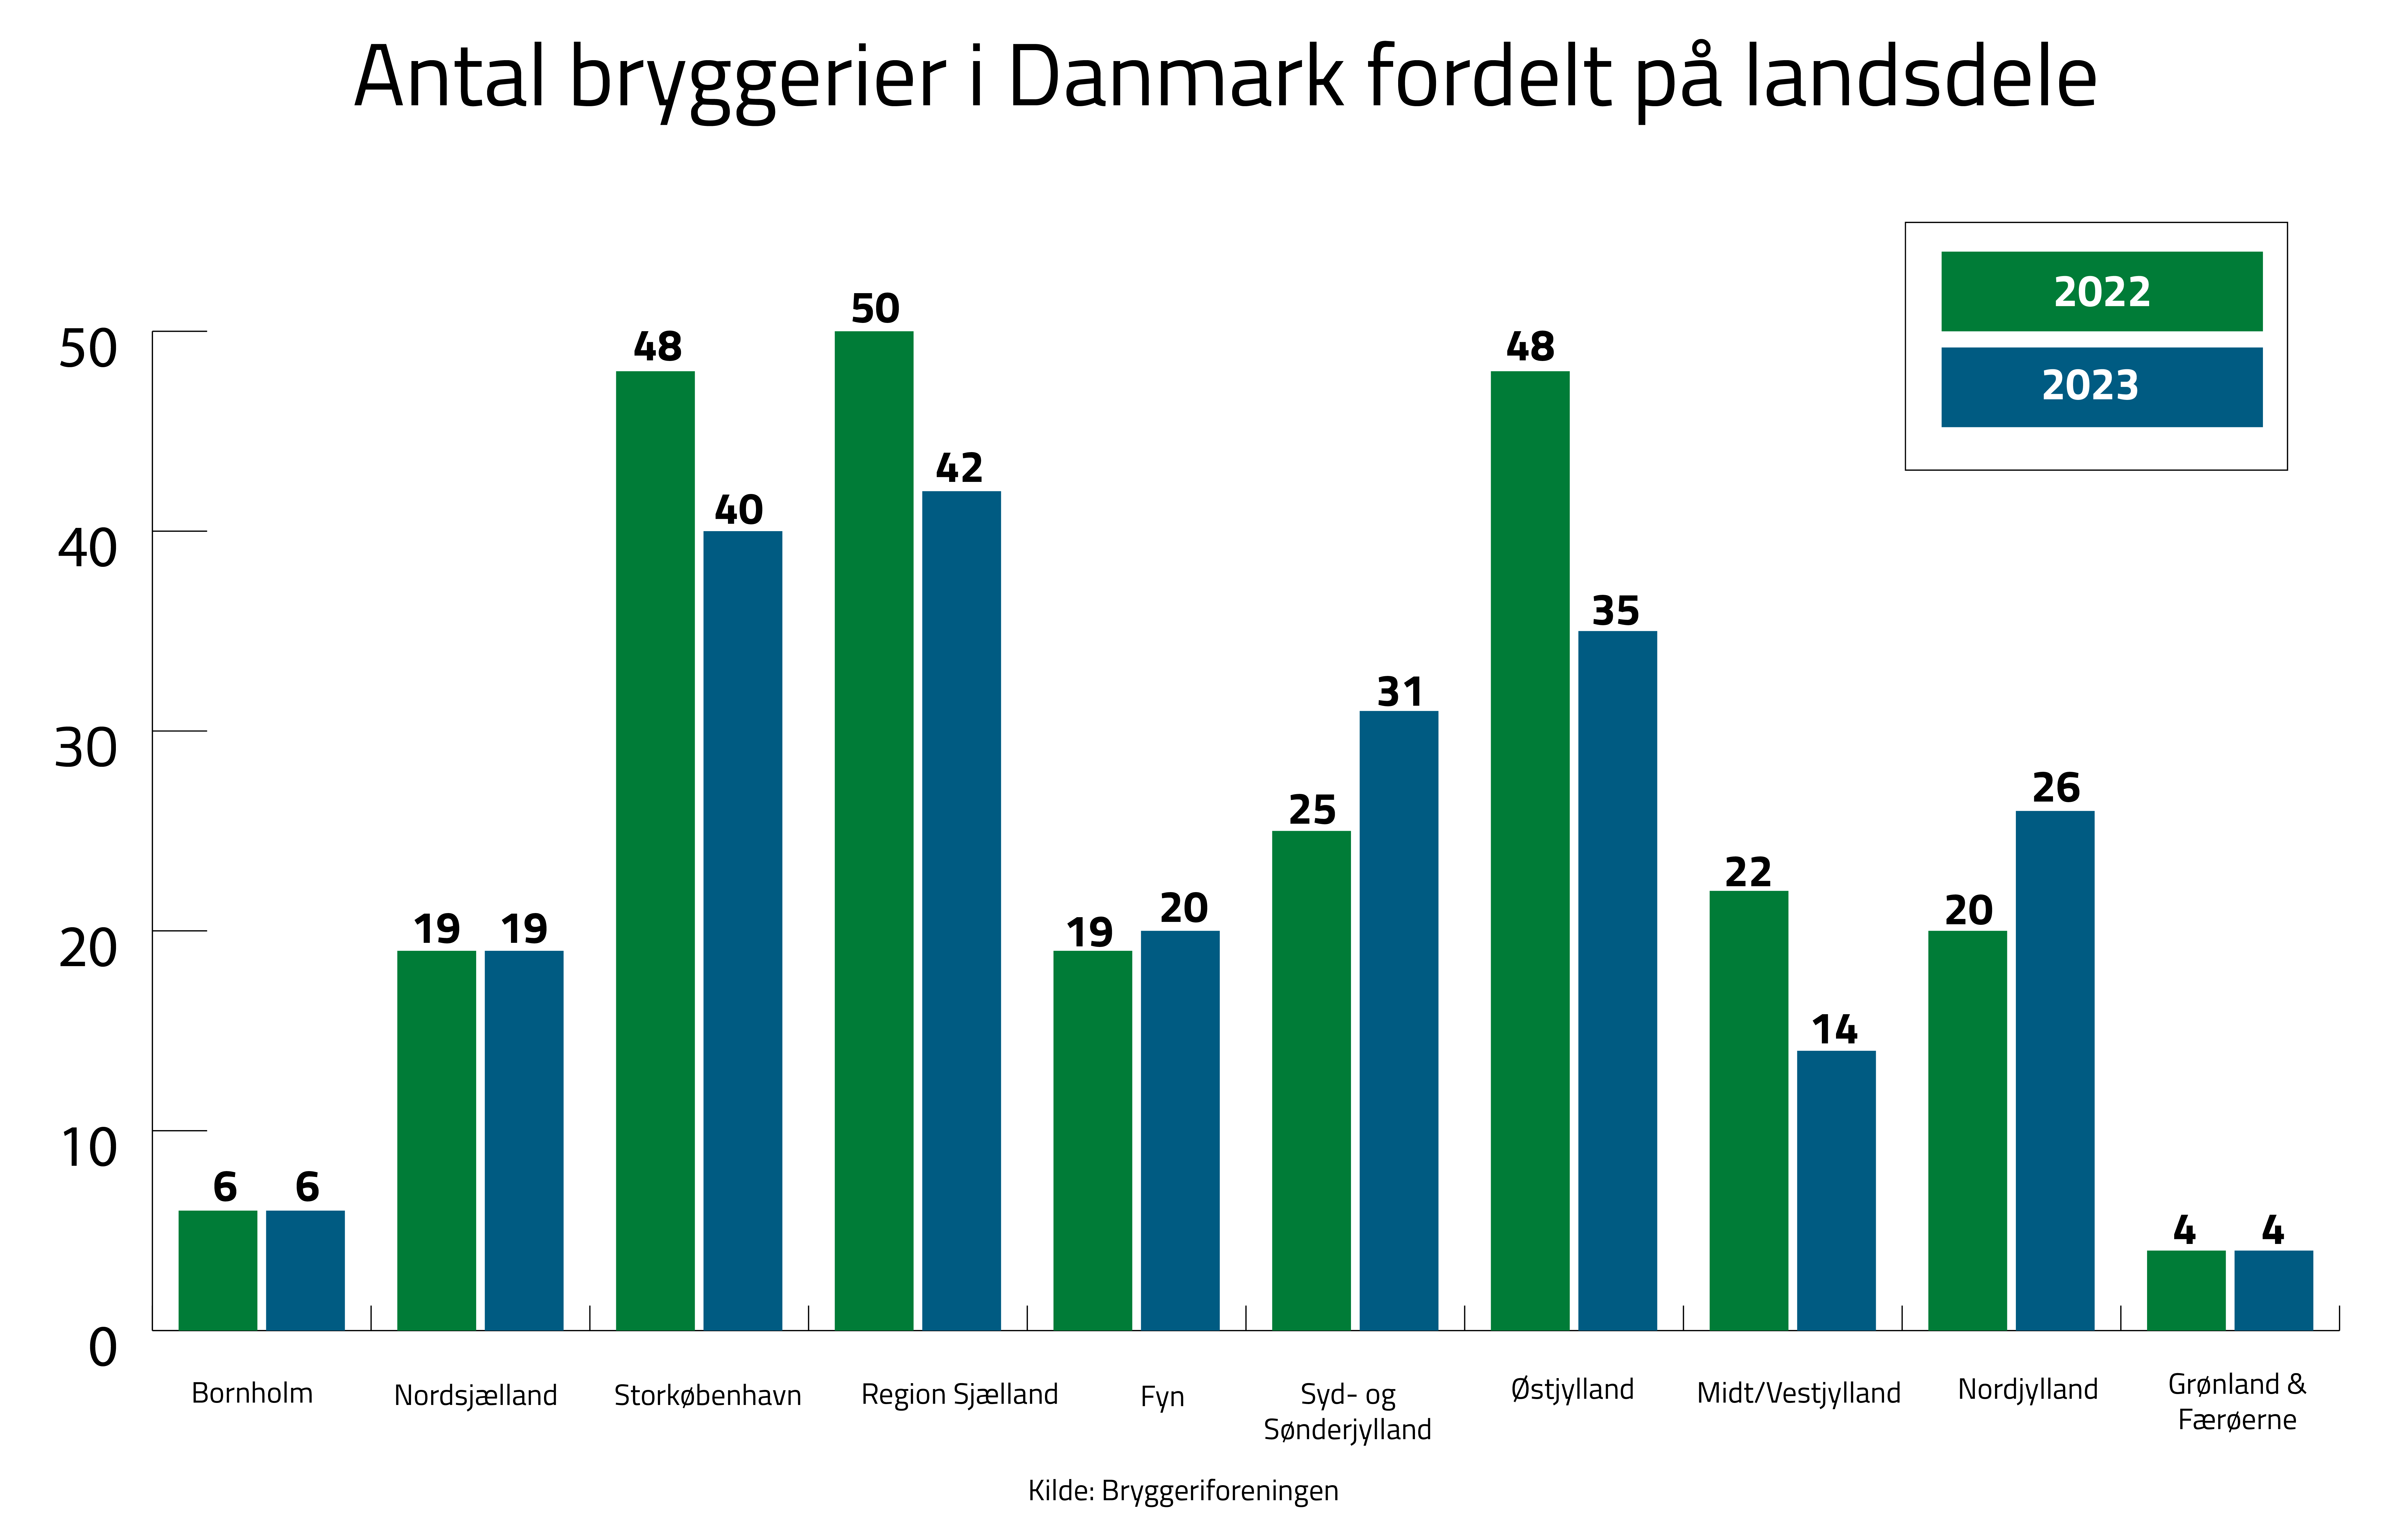 Færre danske bryggerier - Regional fordeling